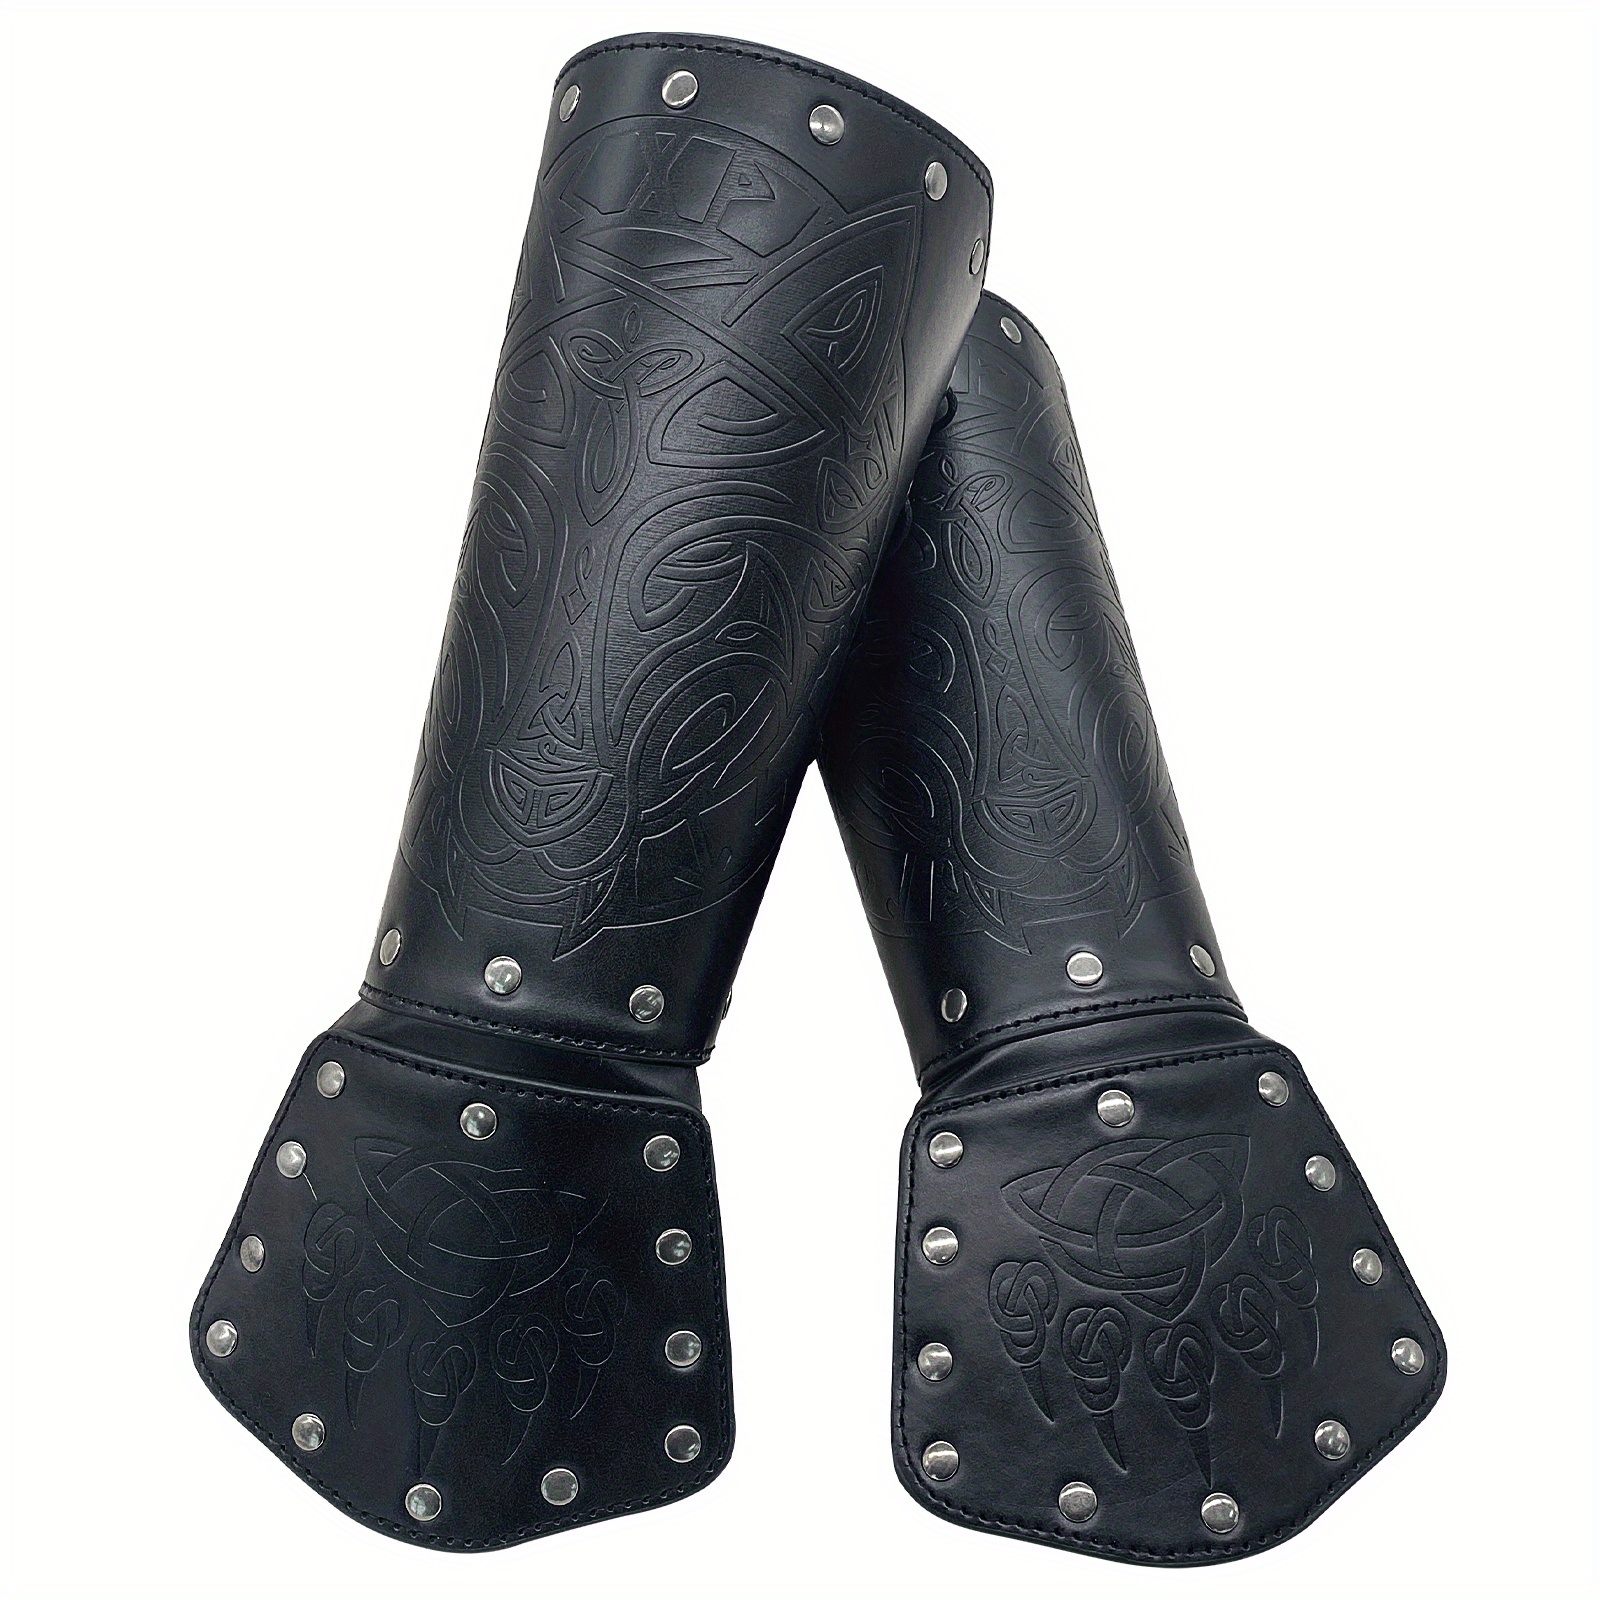 Generic Arm Guard Medieval Bracer Costume Props Black @ Best Price Online